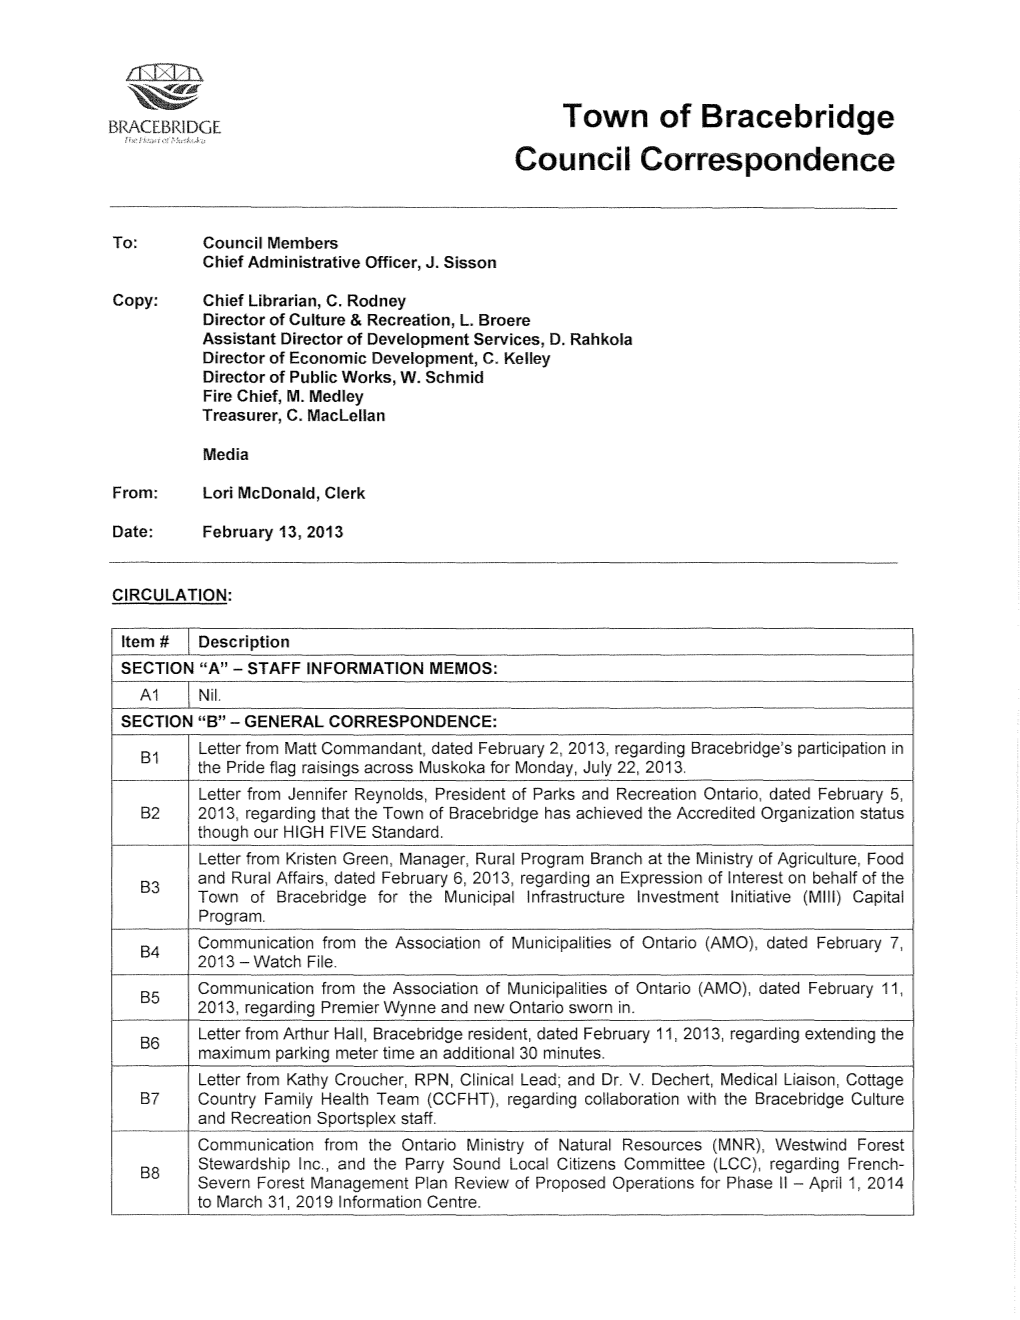 Town of Bracebridge Council Correspondence